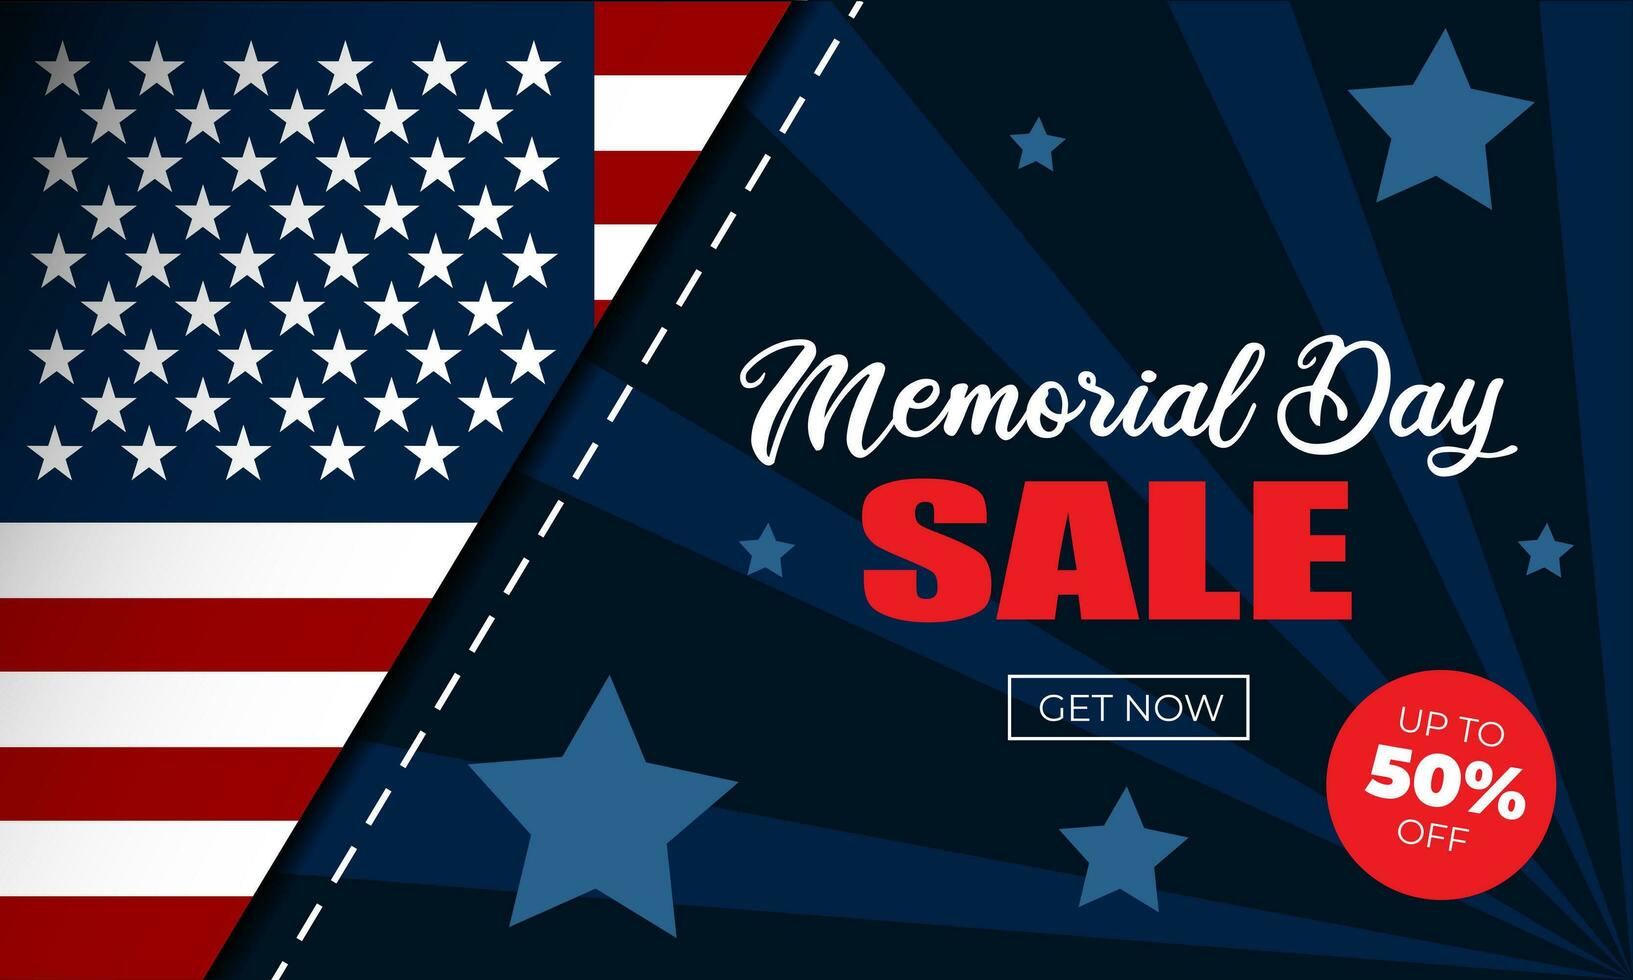 Memorial Day Sales Background vector illustration